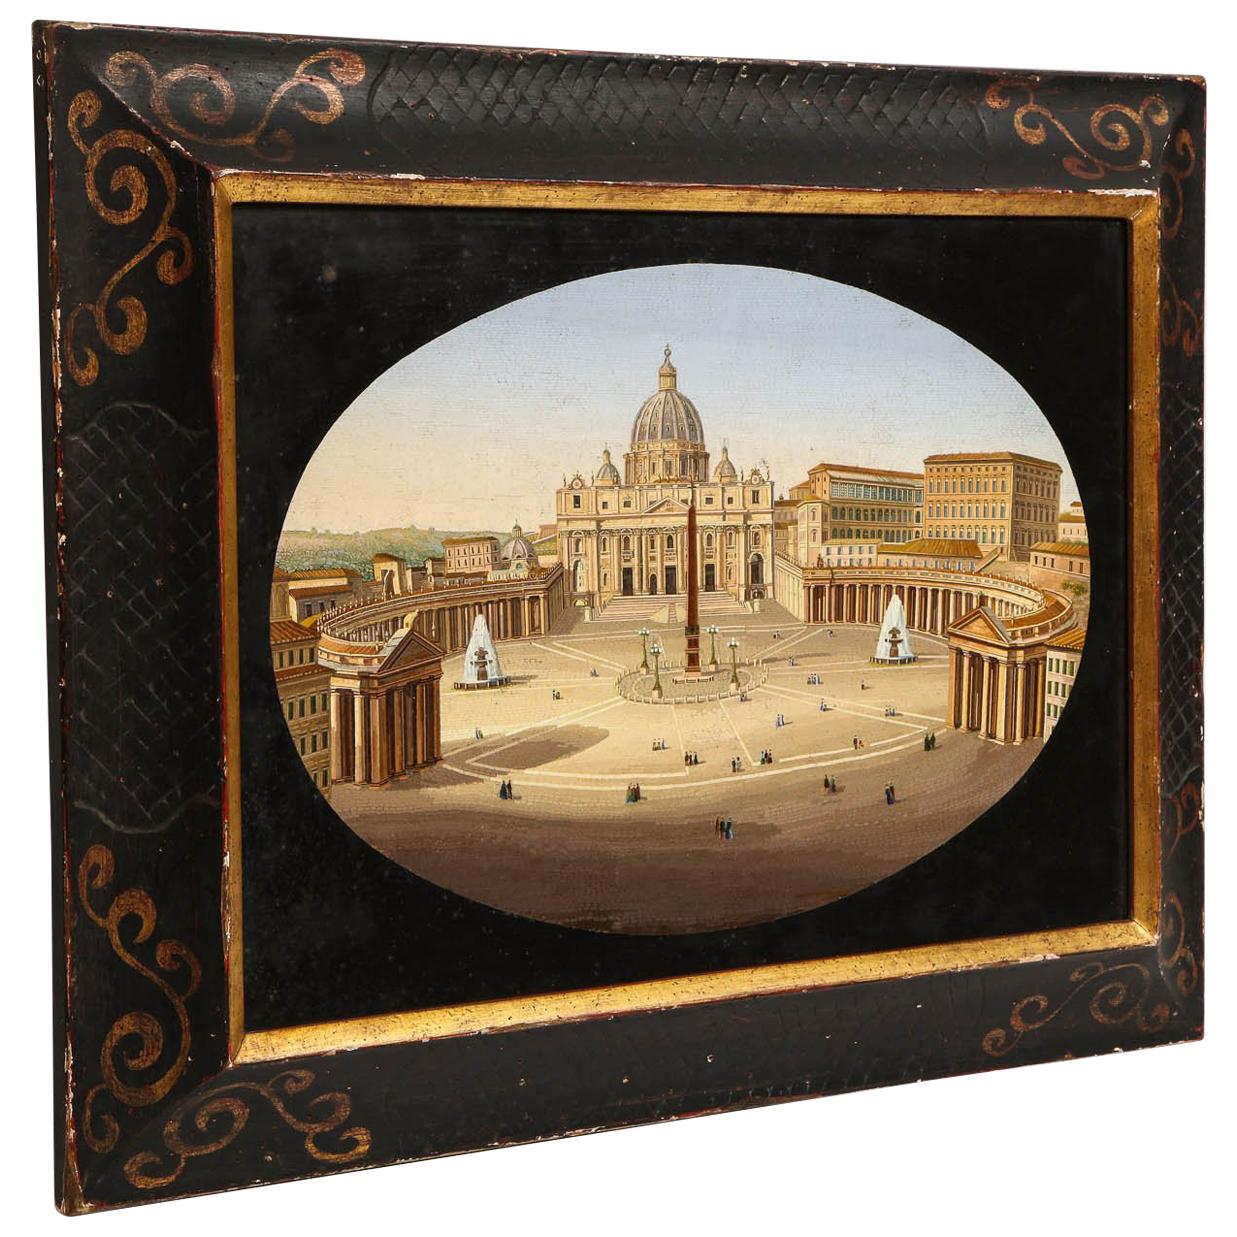 Large Italian Micromosaic Plaque of St. Peter’s Basilica, Venice, circa 1860